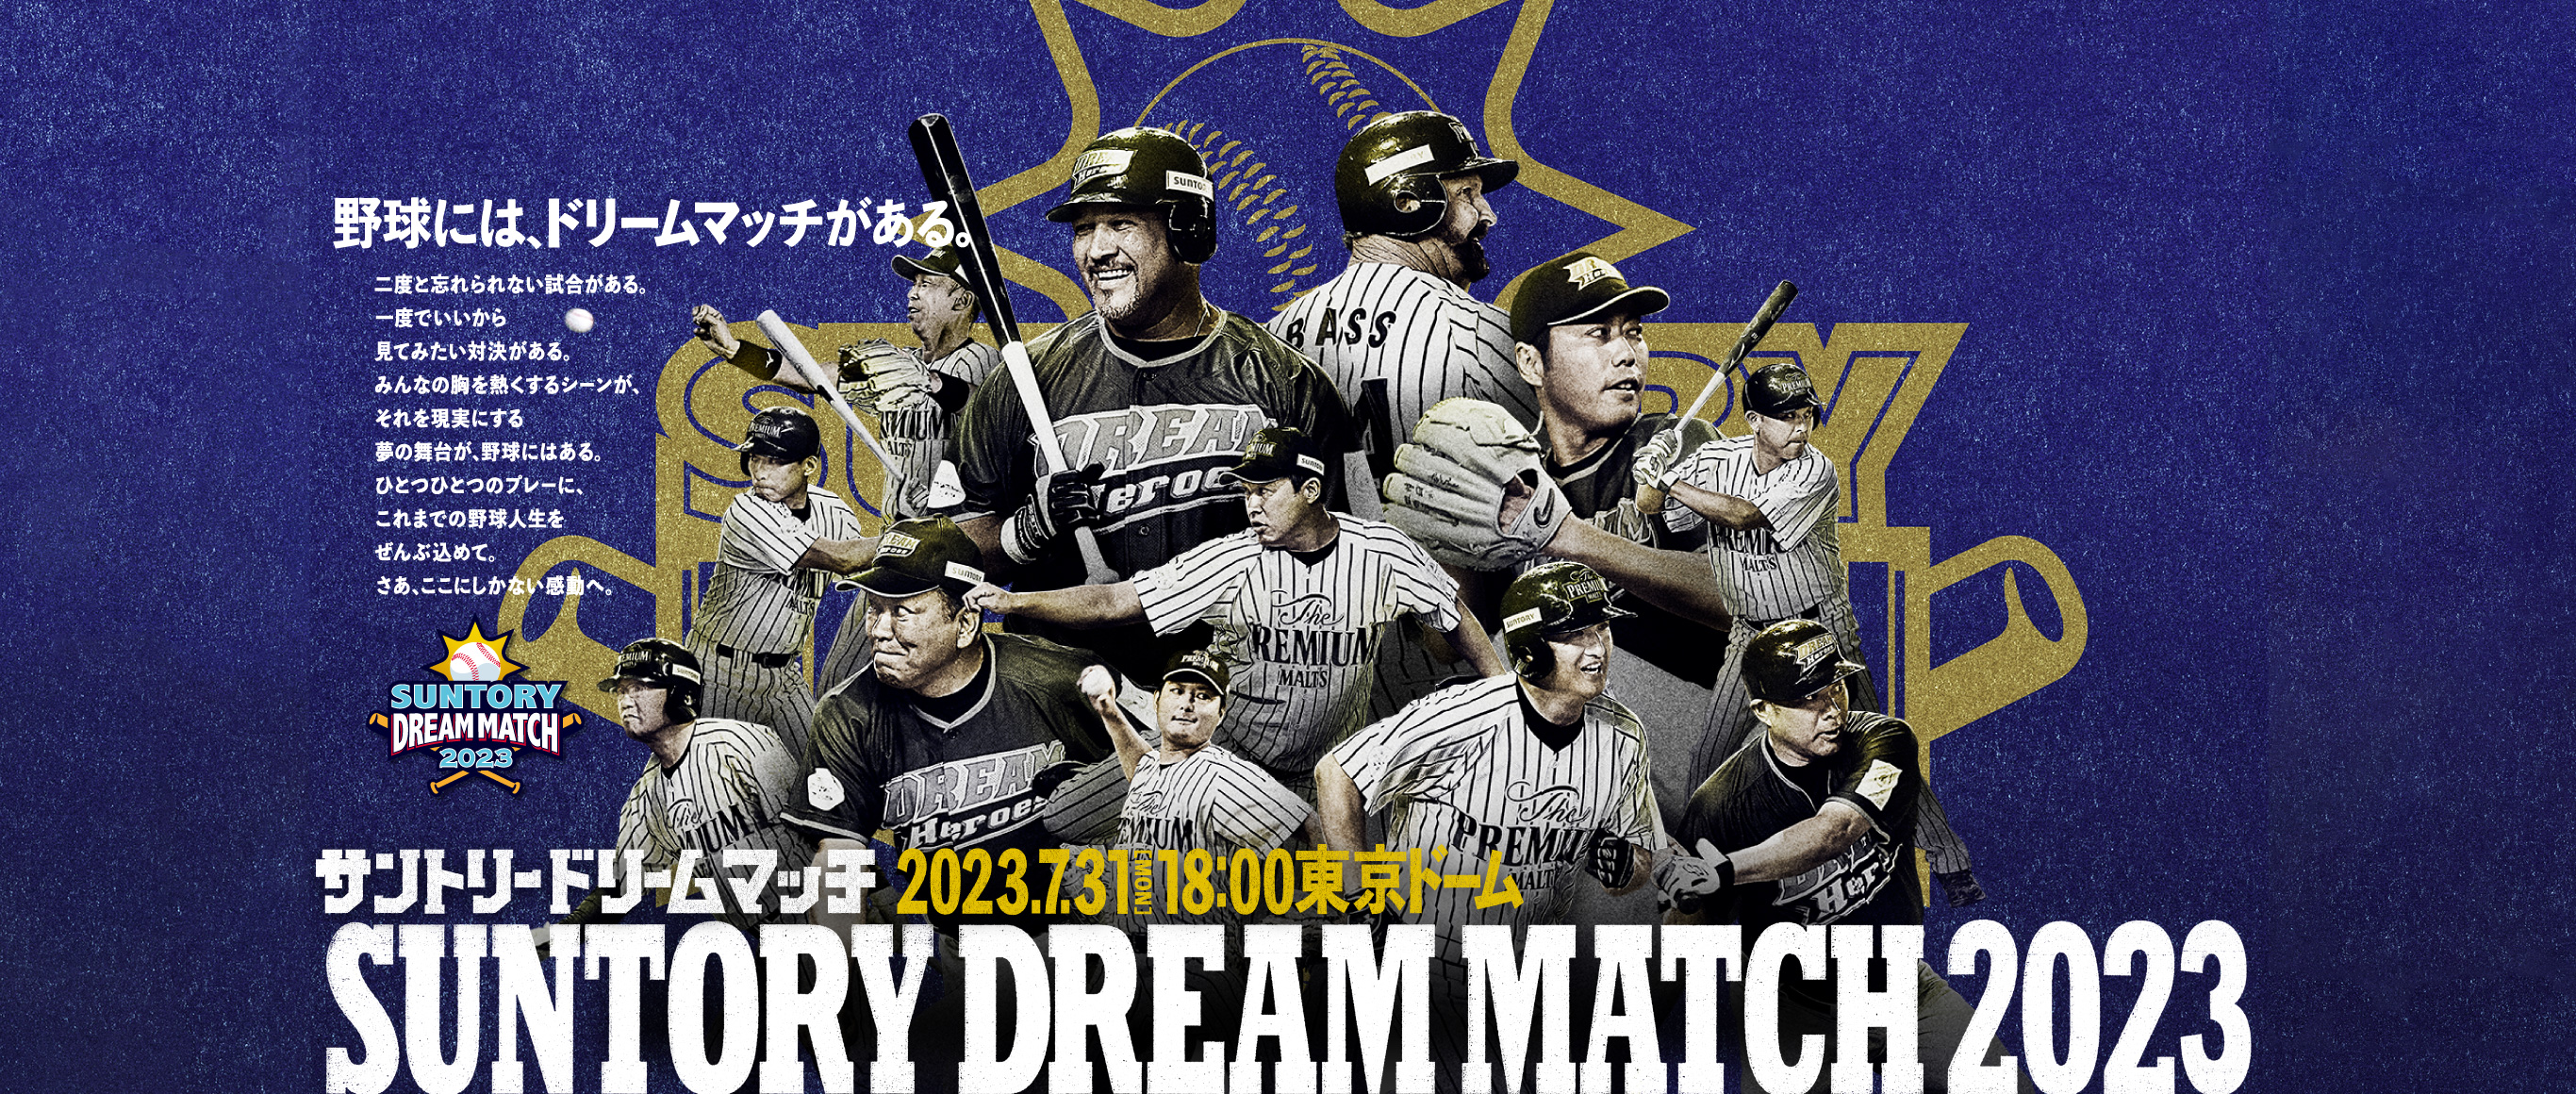 SUNTORY DREAM MATCH 2023 - 2023.7.31(MON)18:00 東京ドーム